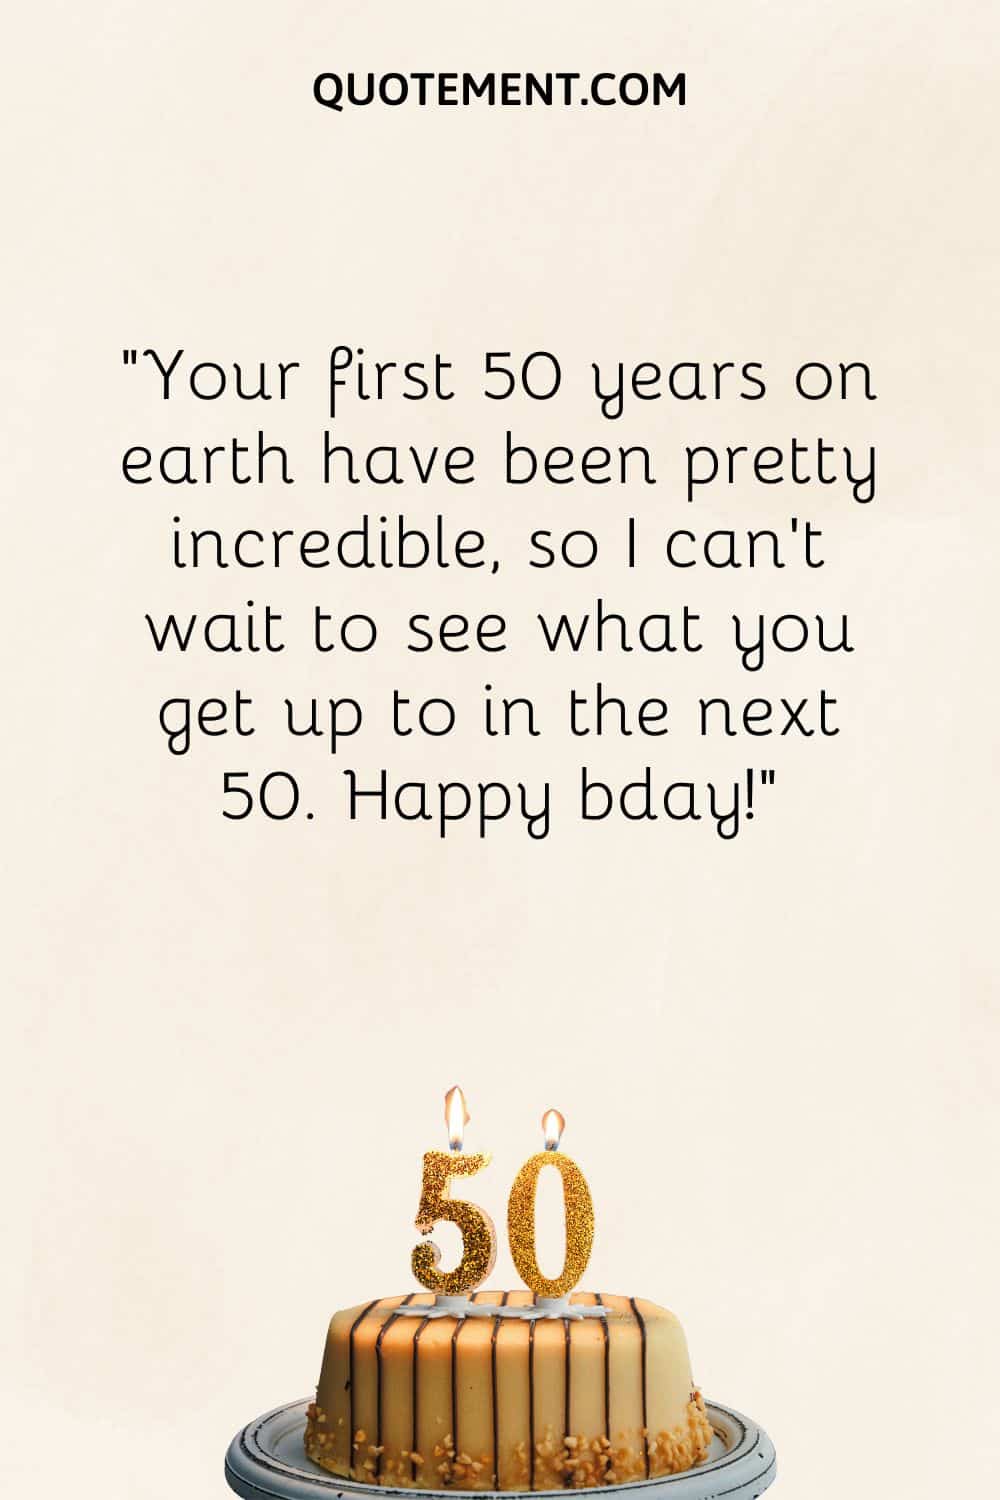 golden birthday cake image representing short 50th birthday wish